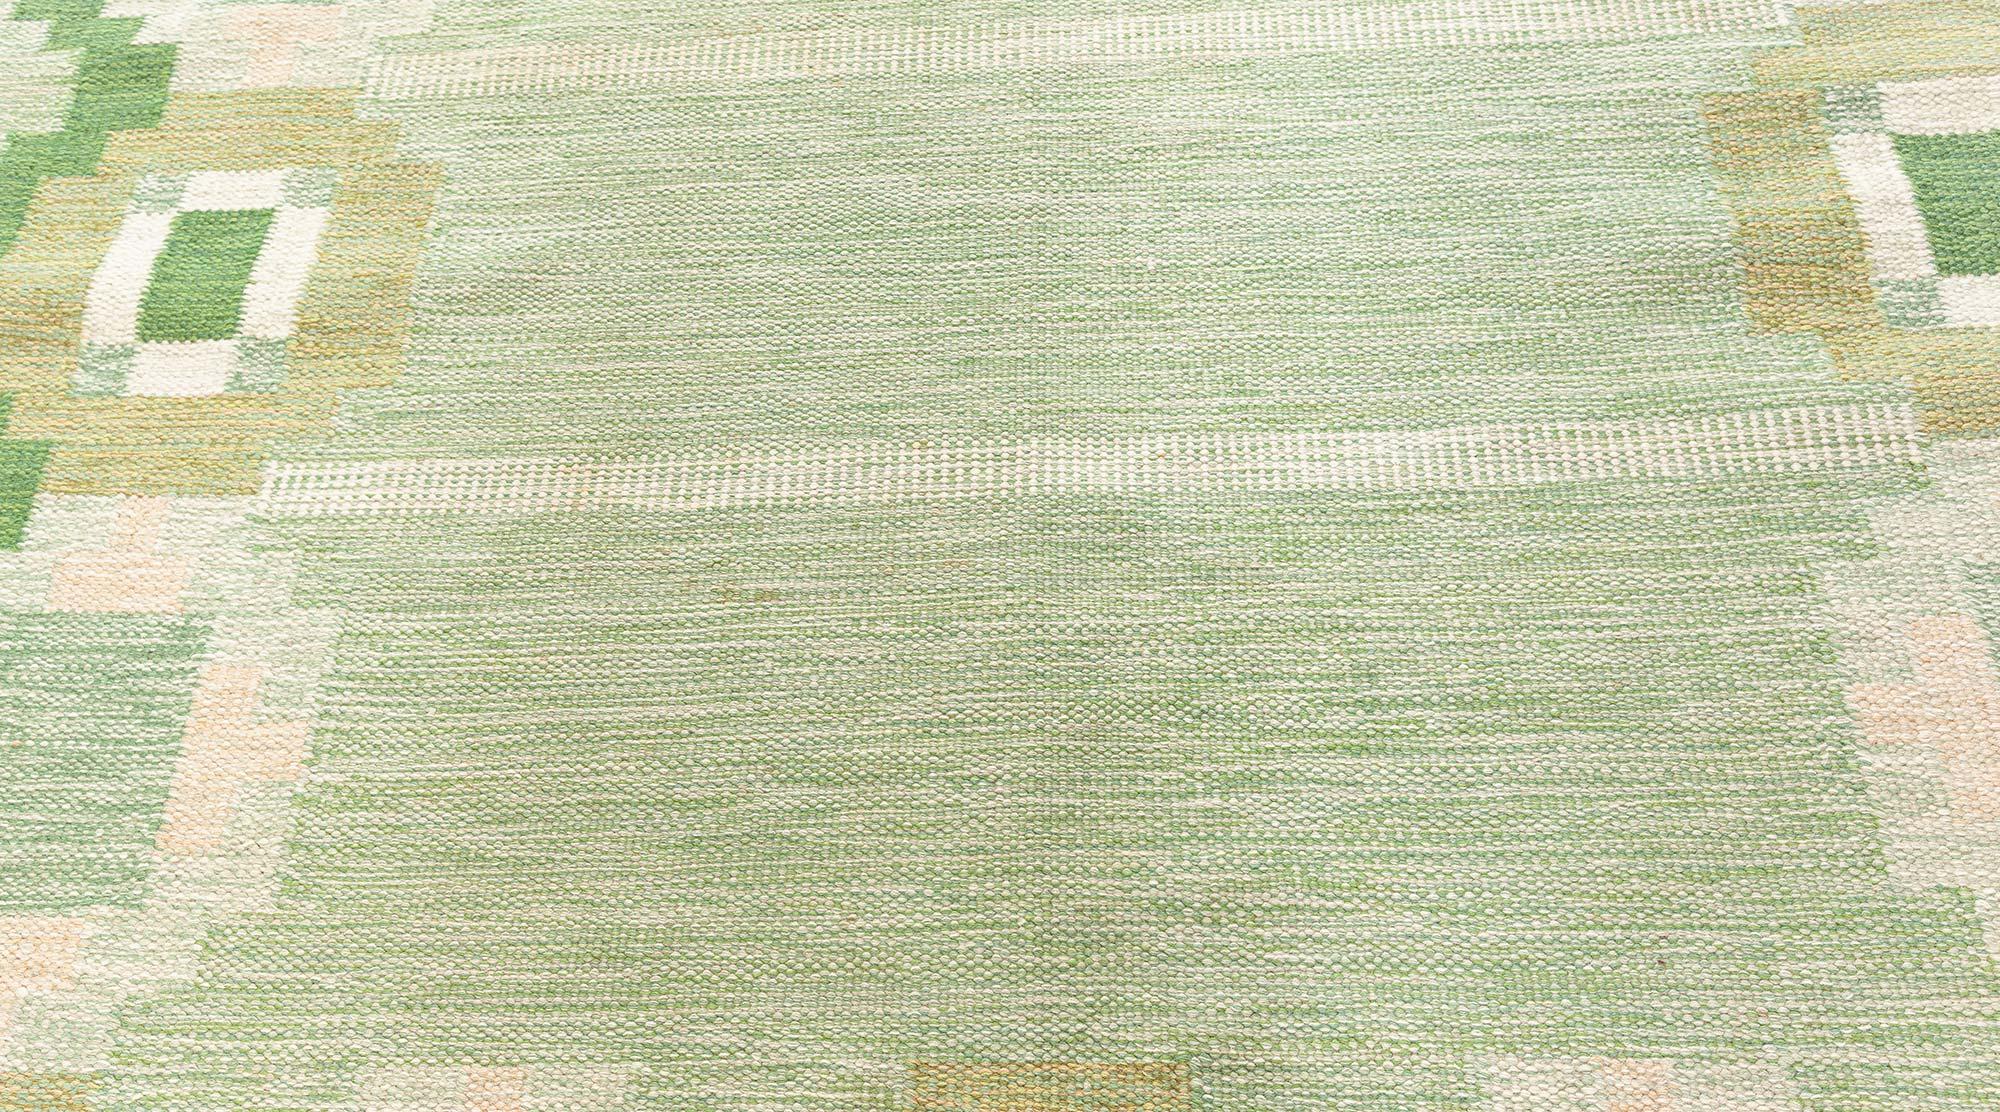 Mid-20th Century Swedish Rolakan rug by Gitt Grannsjo-Carlsson (GG)
Size: 6'5